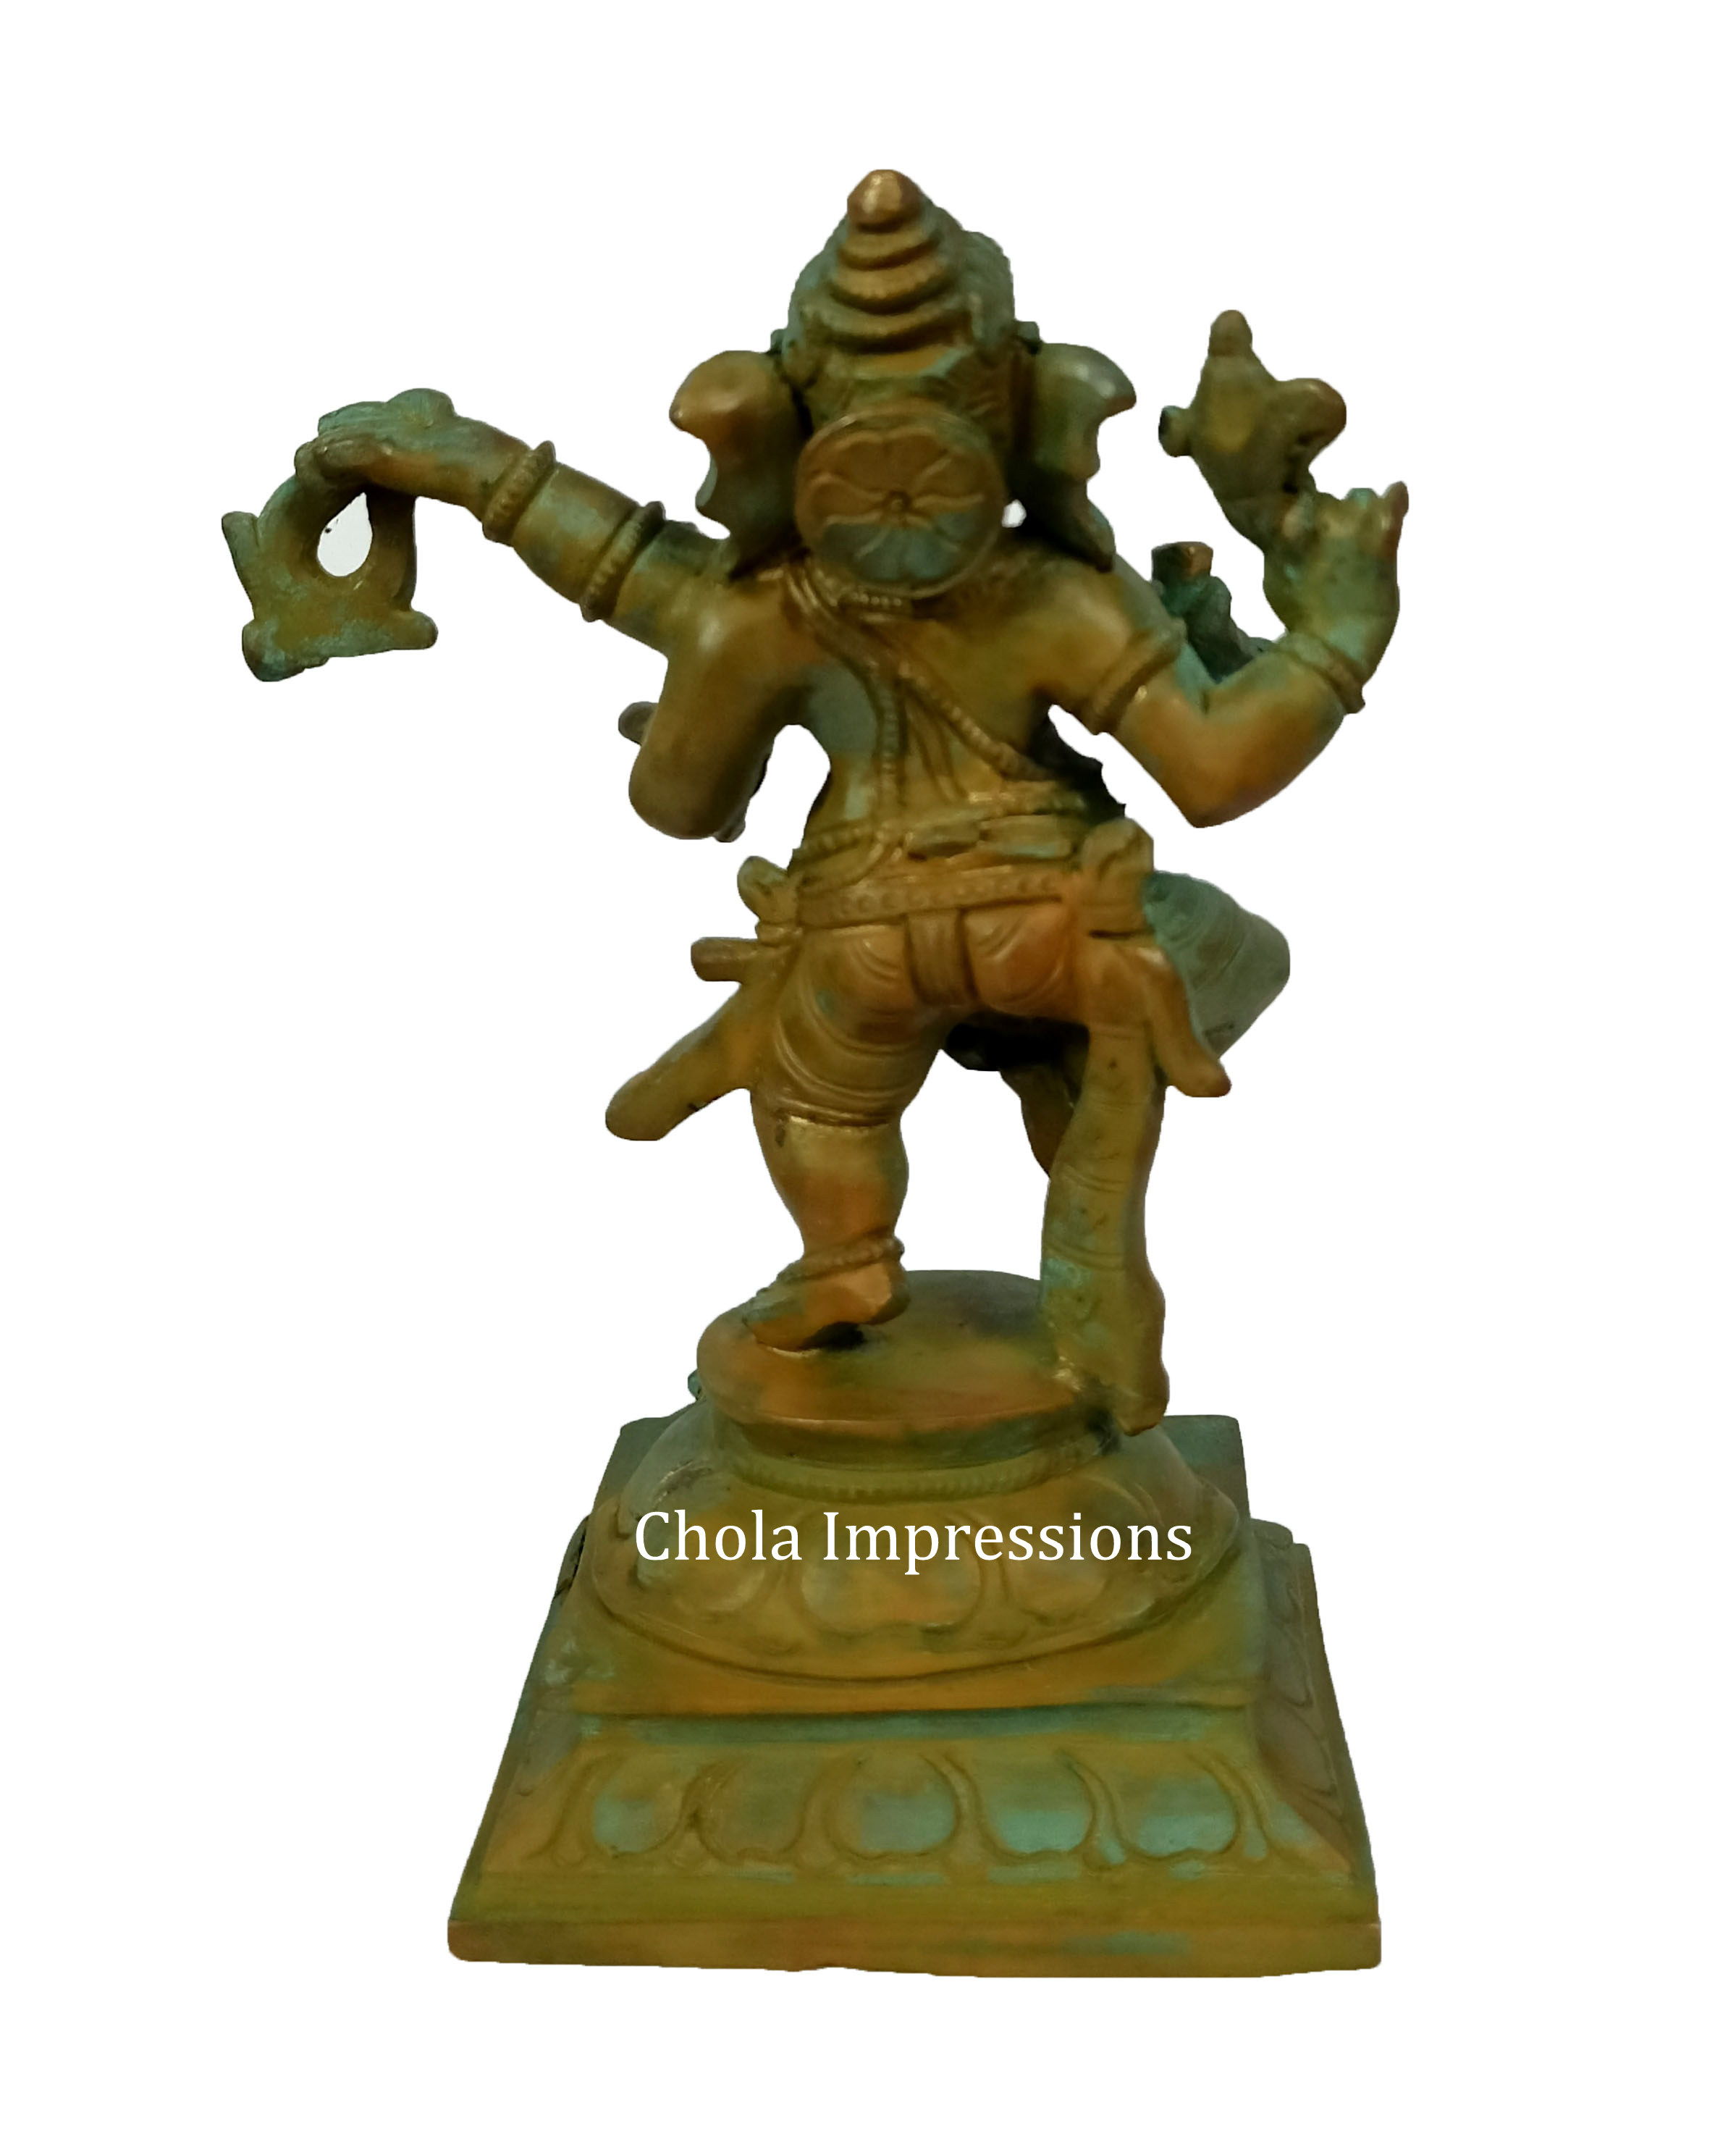 Dancing Ganesha Panchaloha Bronze Statue in Antique Finish - 6 inches